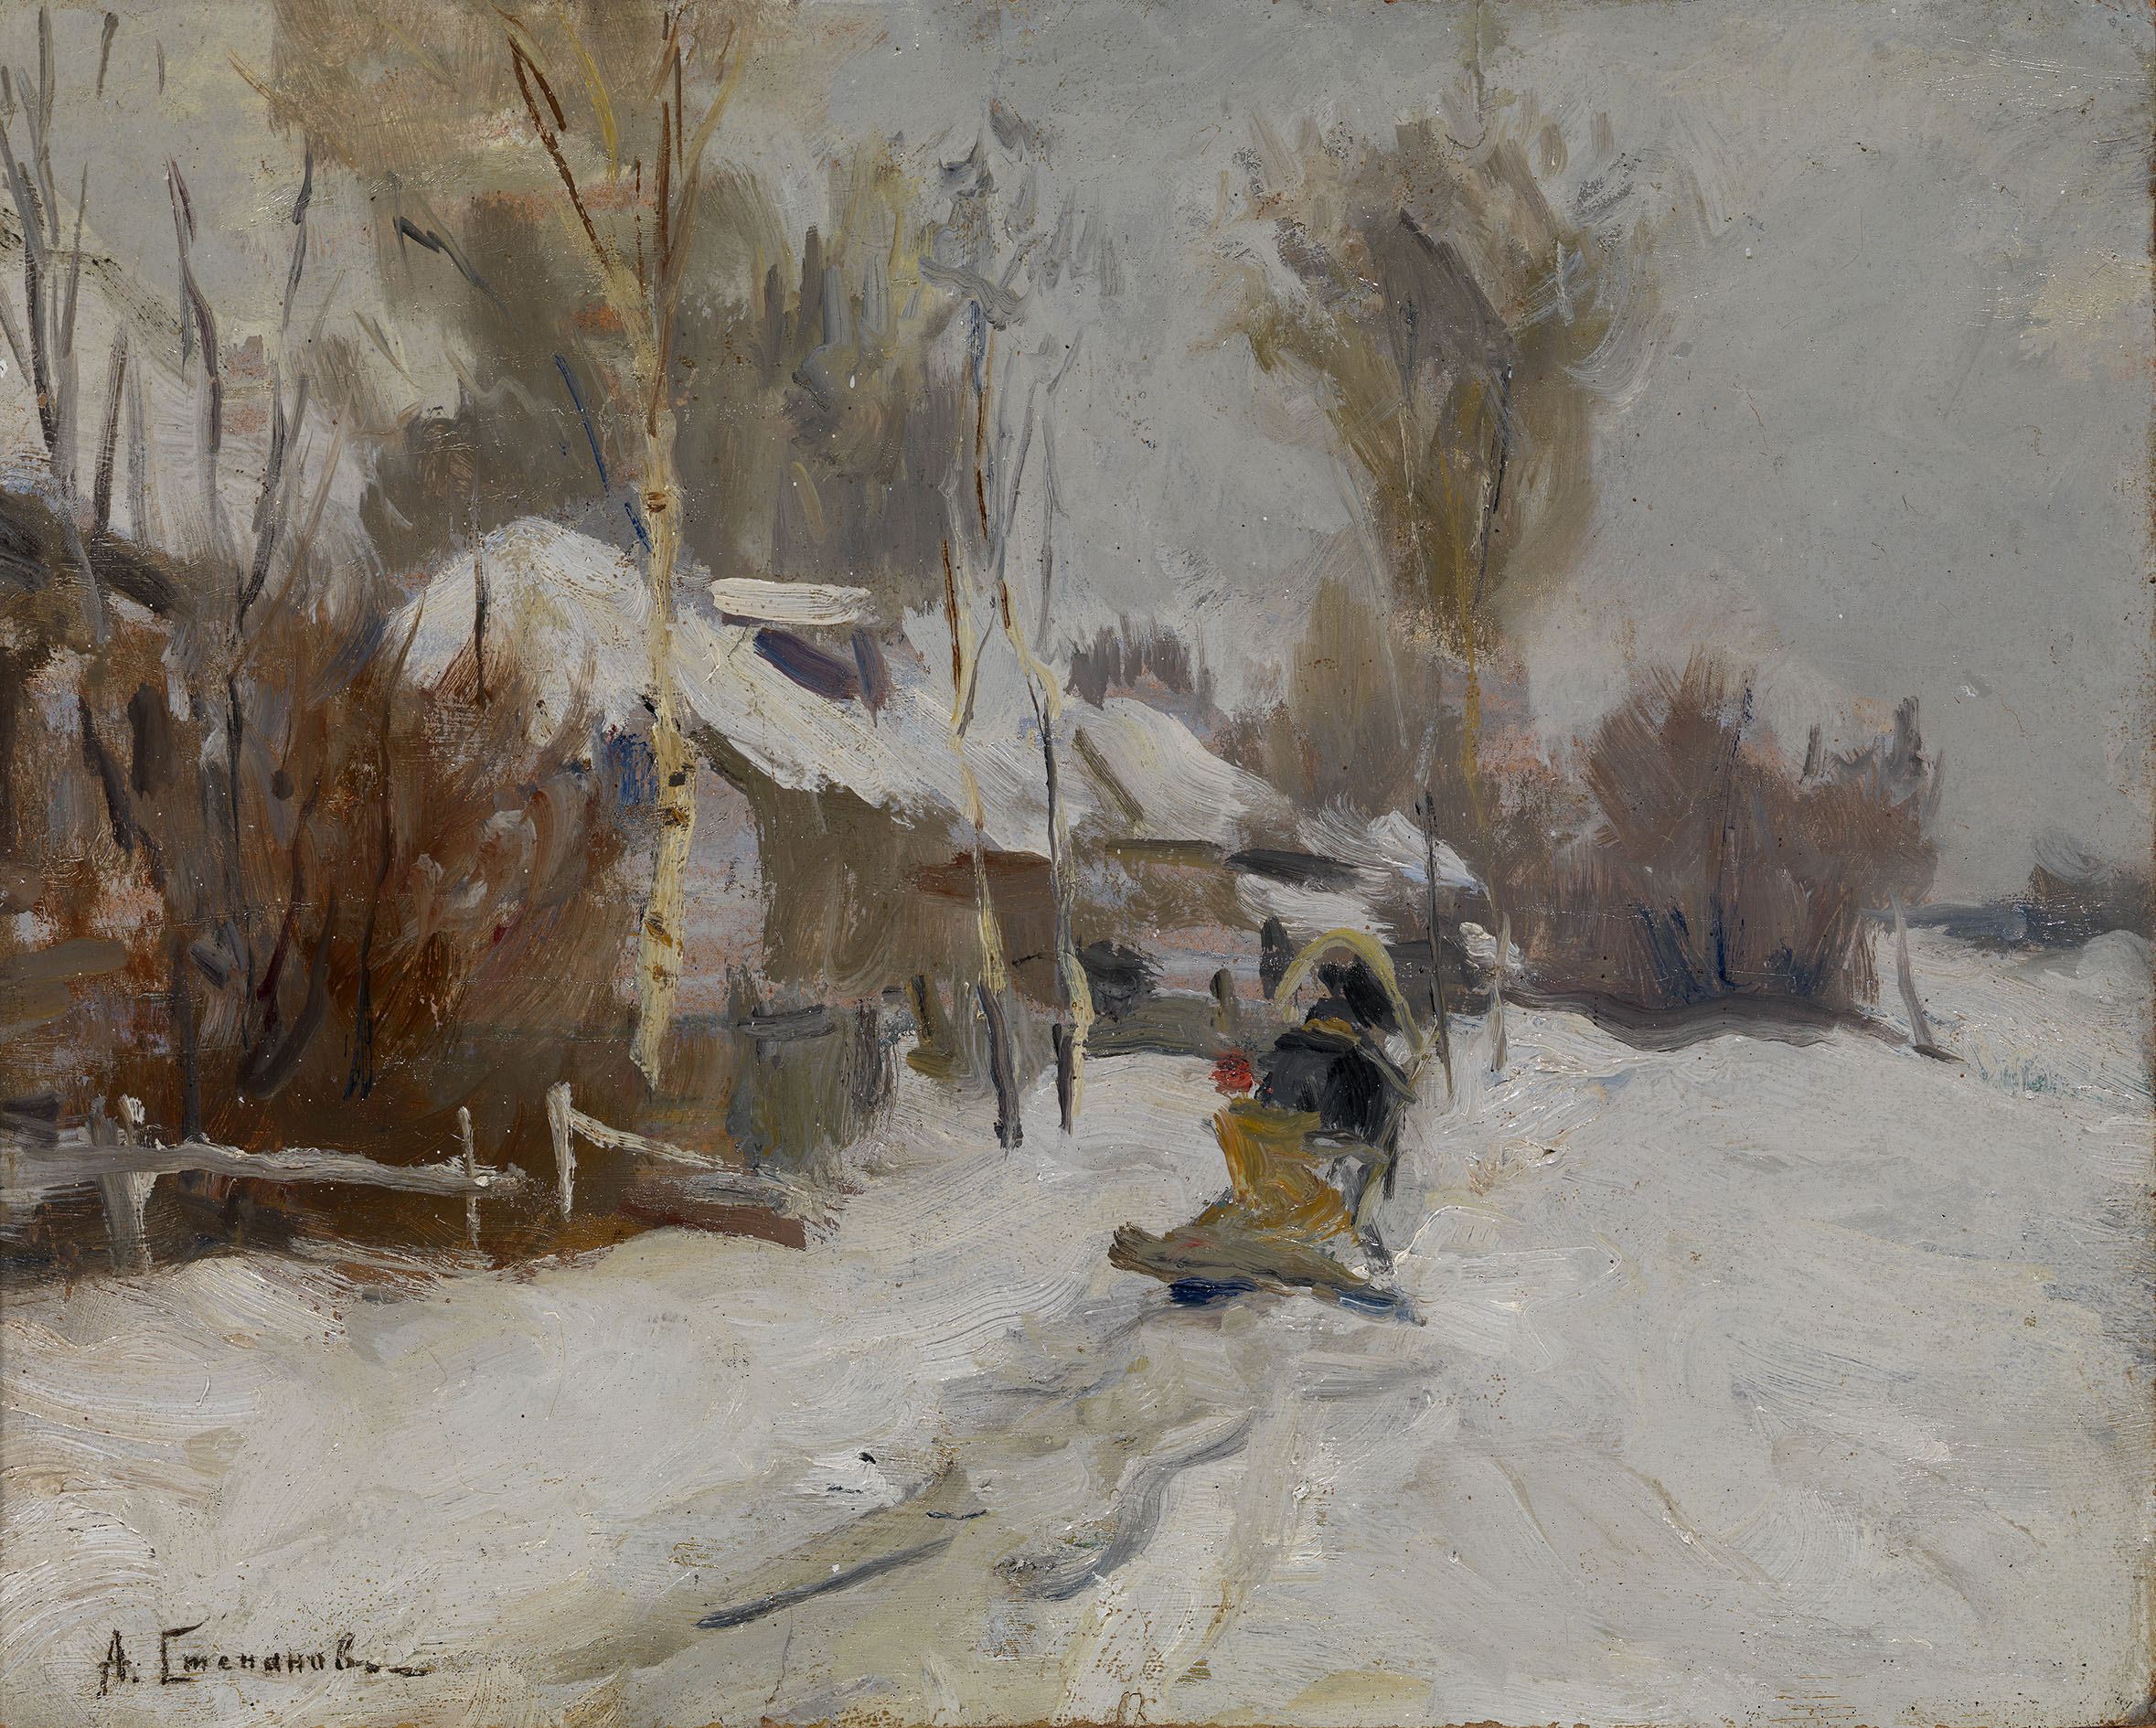 STEPANOV, ALEXEI Winter Scene with Horse Sledge